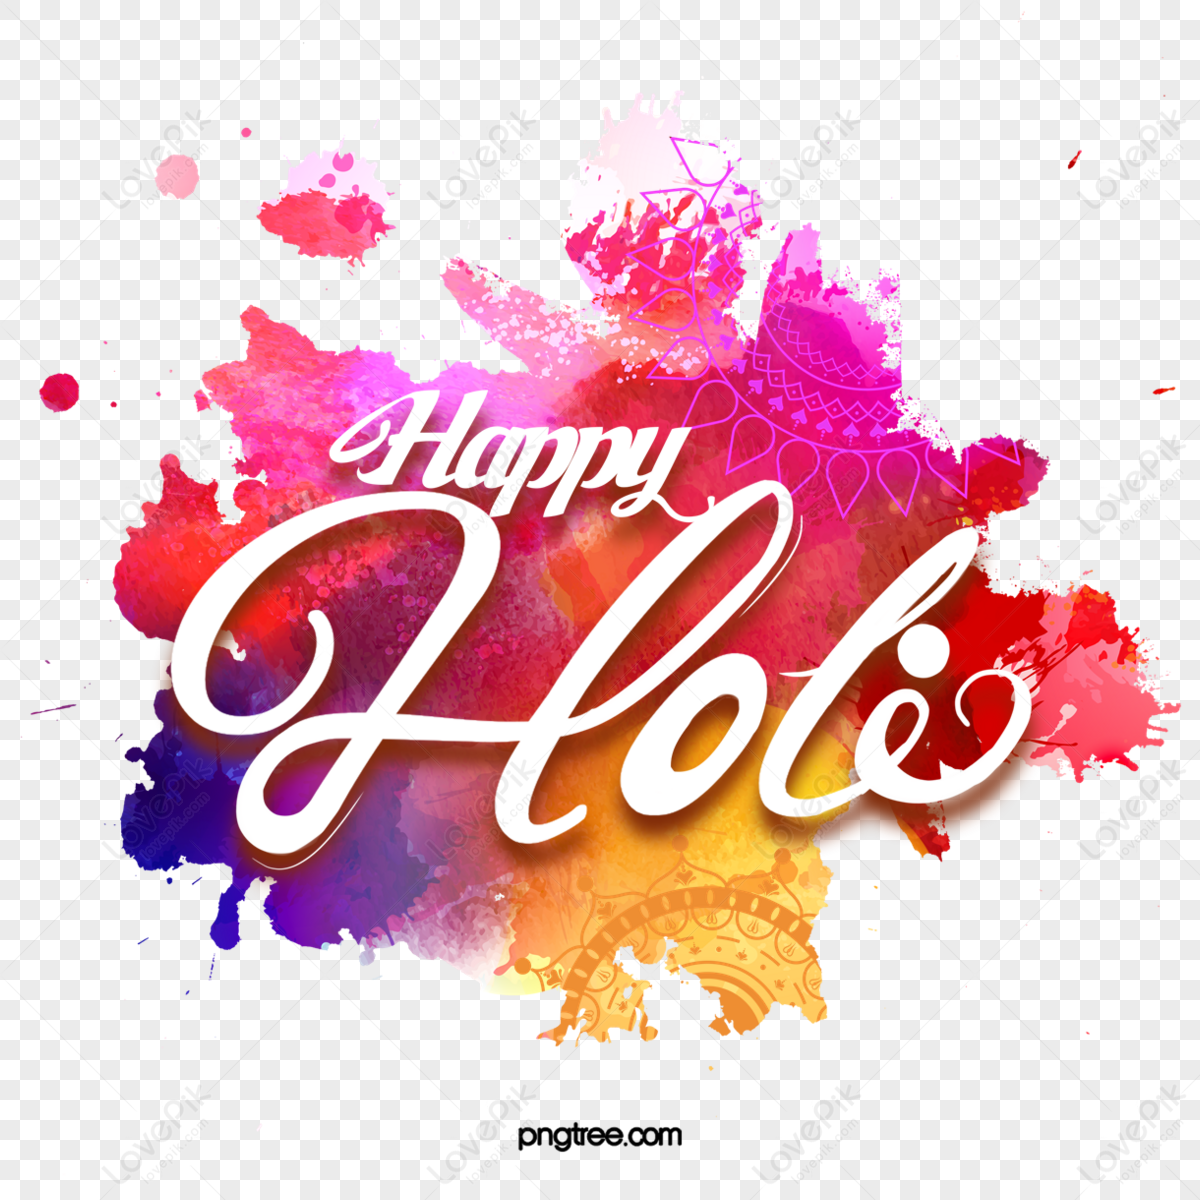 Image of Indian Festival of Colours, Happy Holi celebration  design.-DQ506297-Picxy